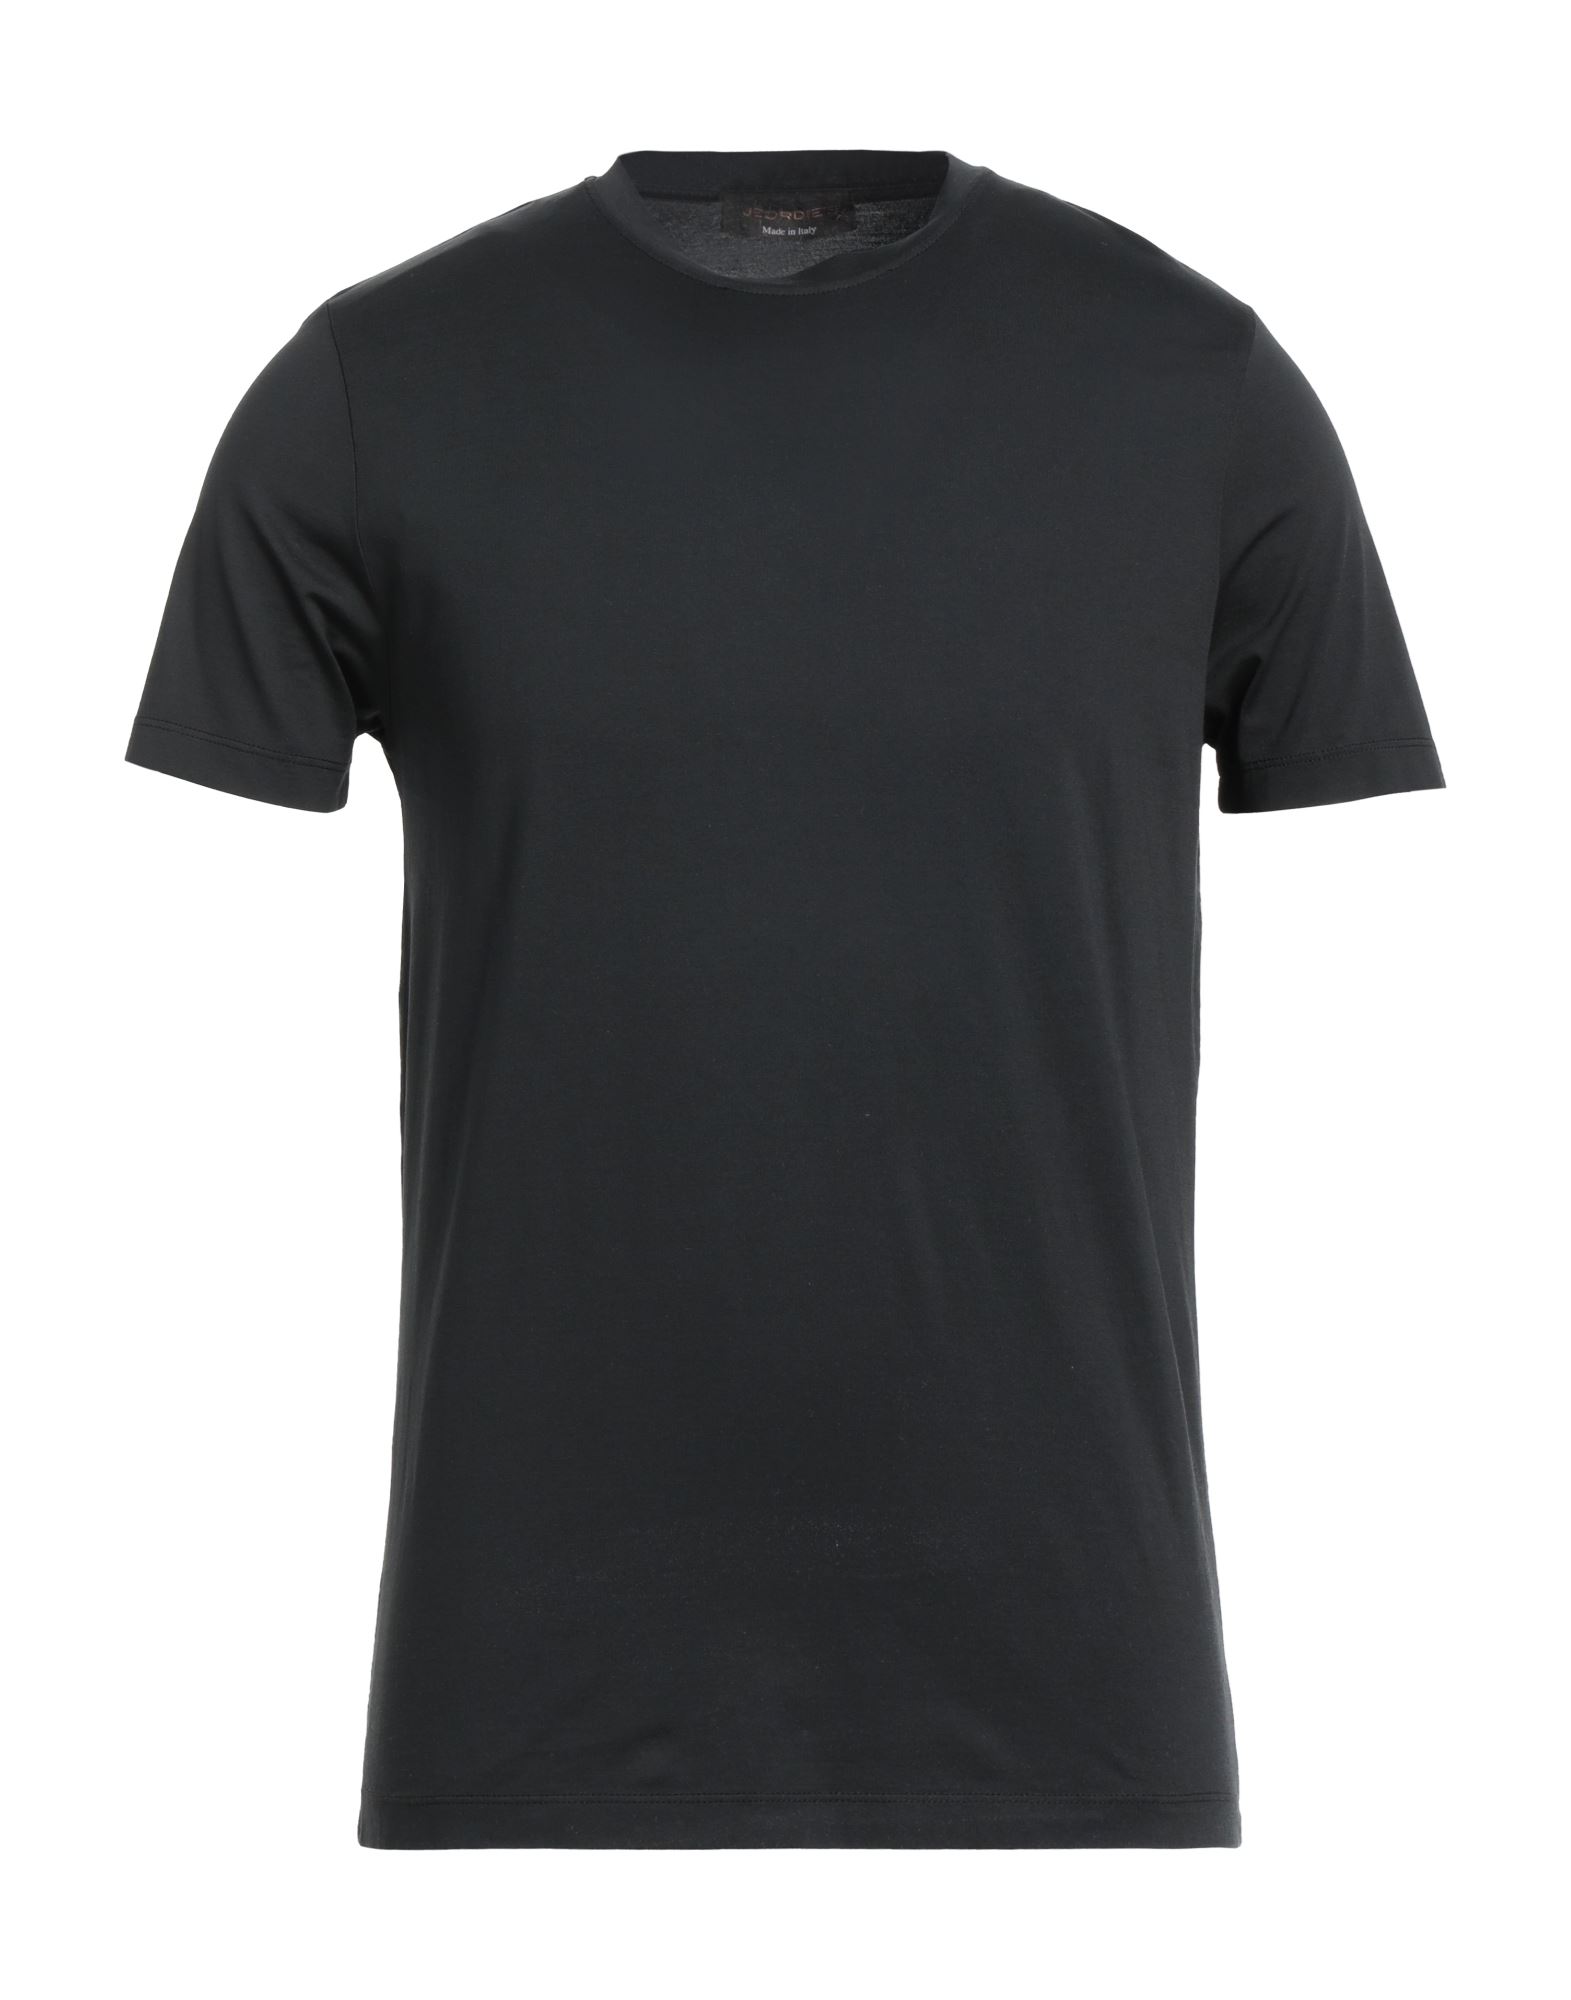 Jeordie's Man T-shirt Black Size S Supima